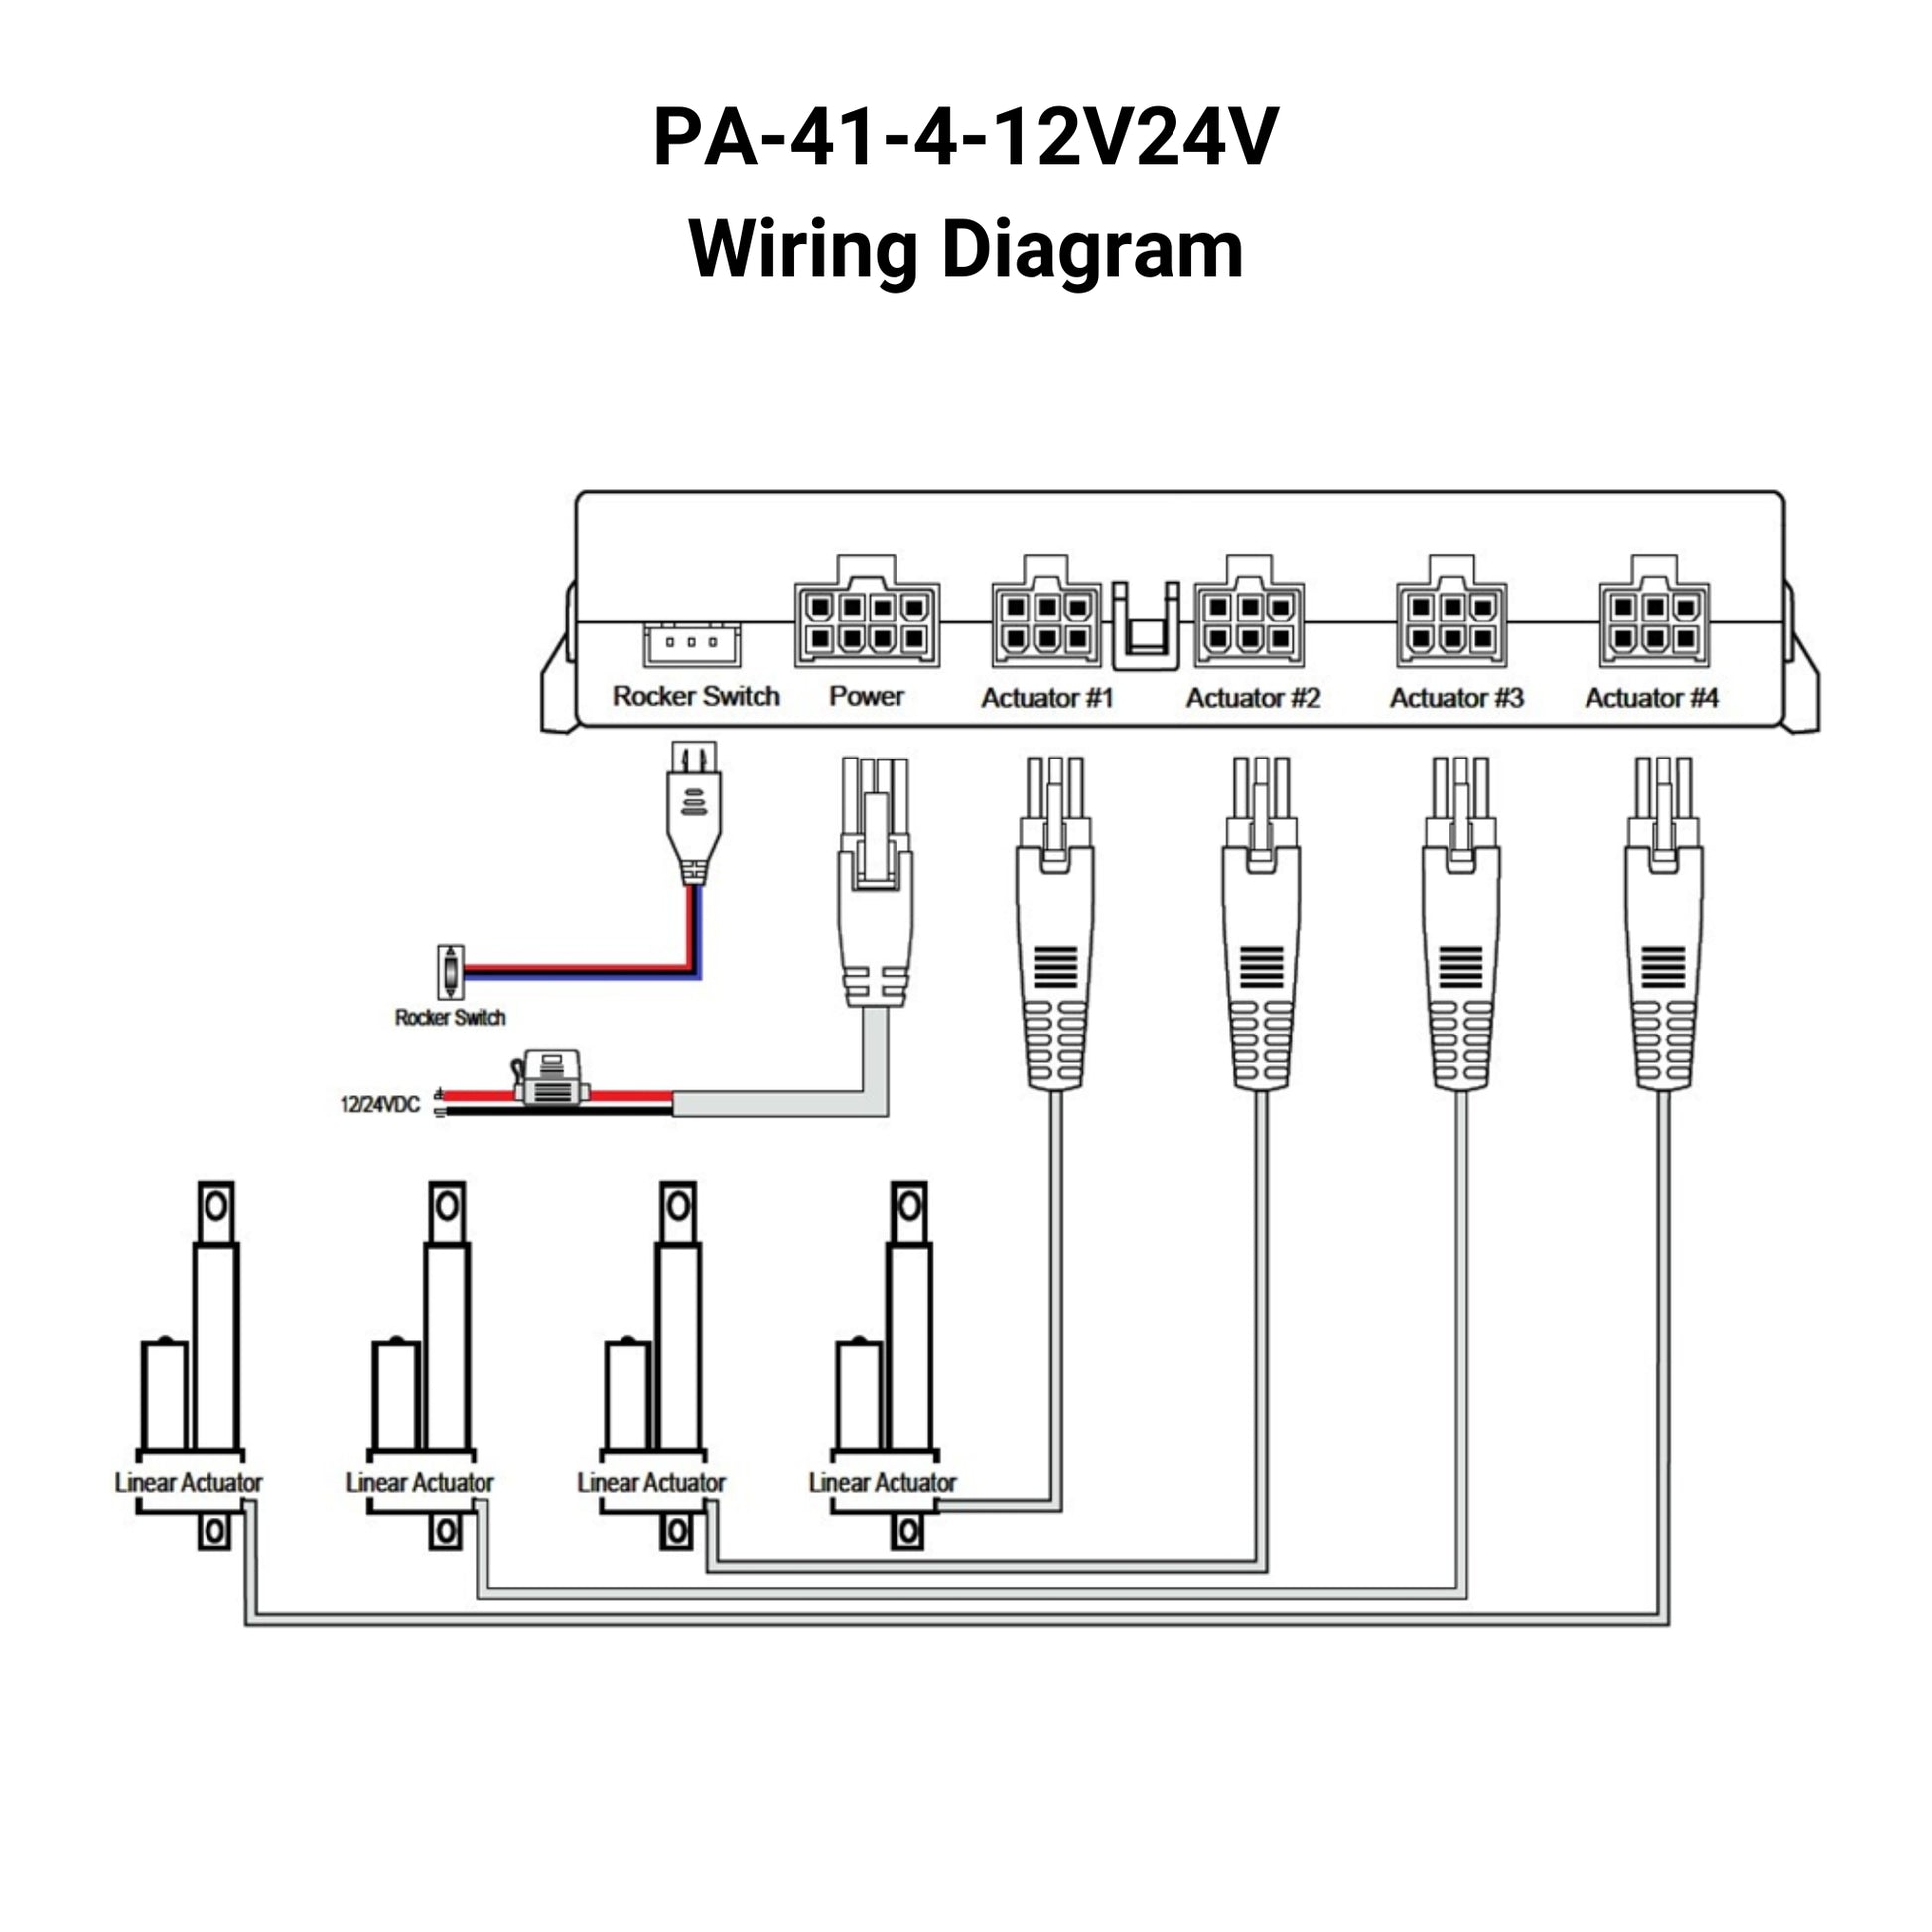 PA-41-4-12V24 control box wiring diagram